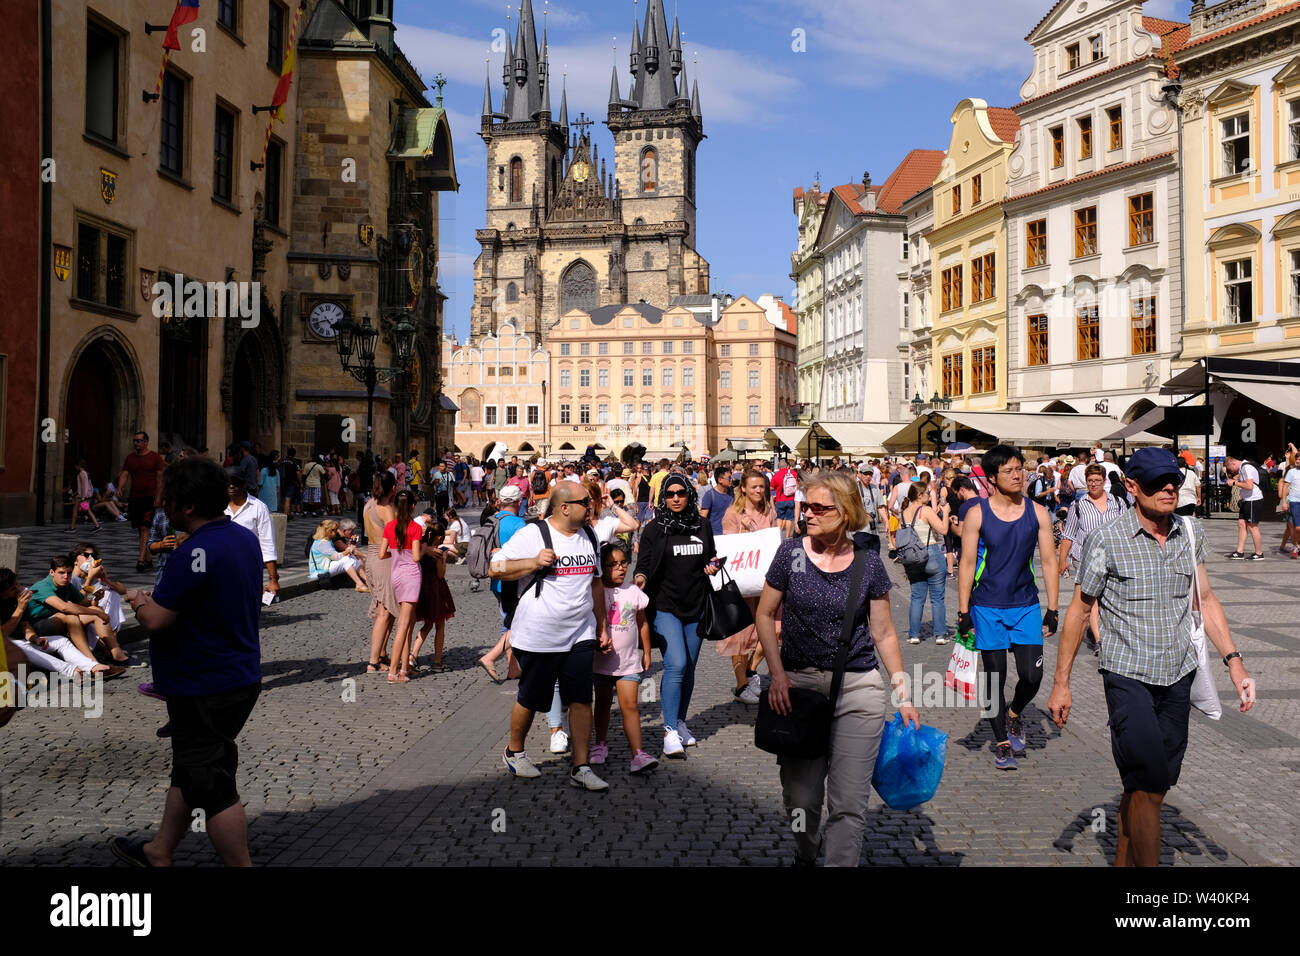 Street scene in Prague, Czech Republic, near Old Town Square Stock Photo